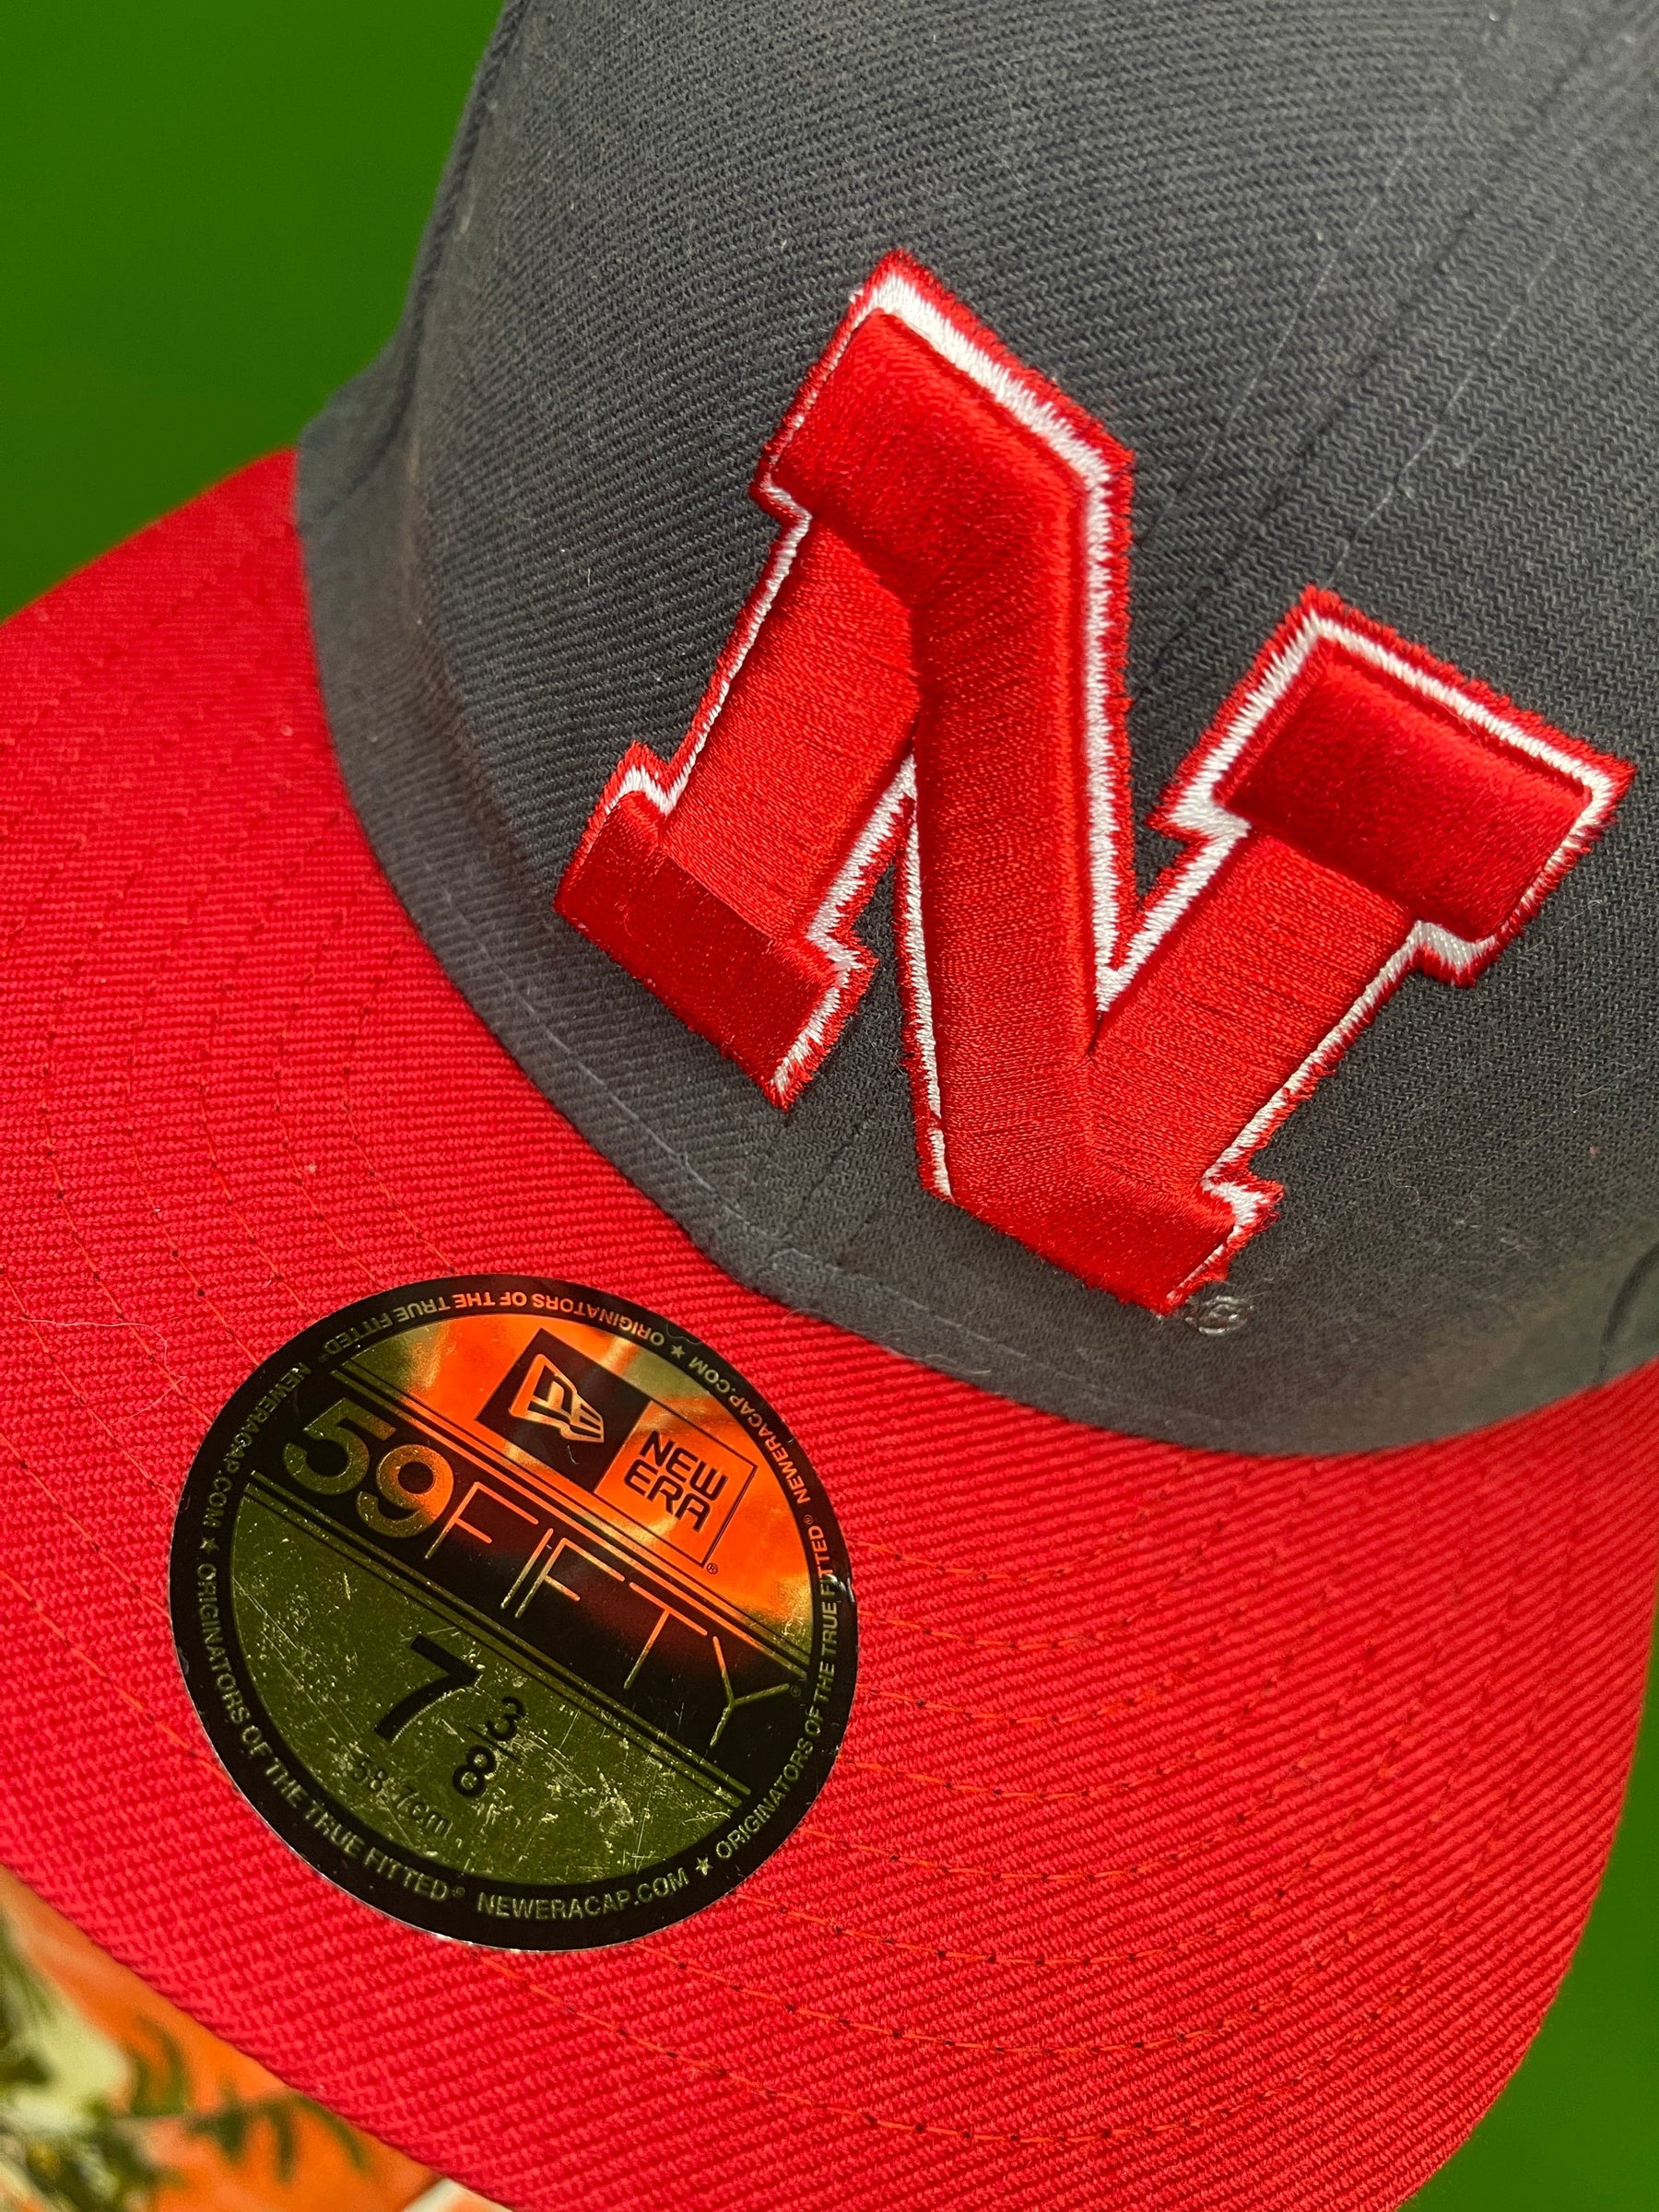 MLB Nebraska Cornhuskers New Era 59FIFTY Baseball Cap/Hat Size 7-3/8 NWT